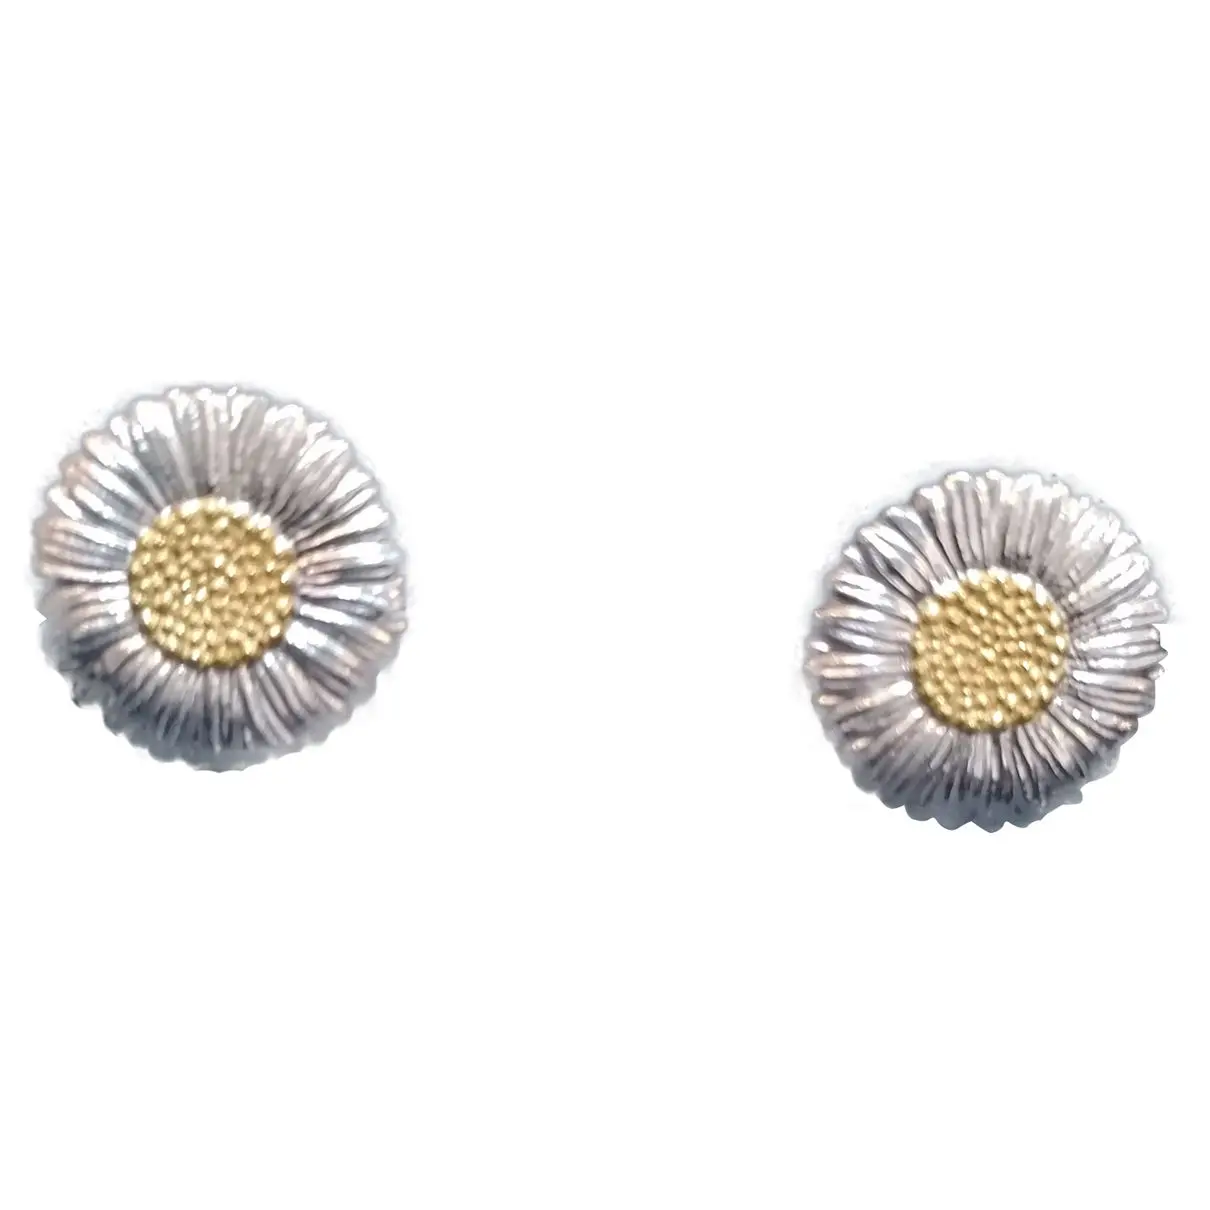 Blossom silver earrings Buccellati